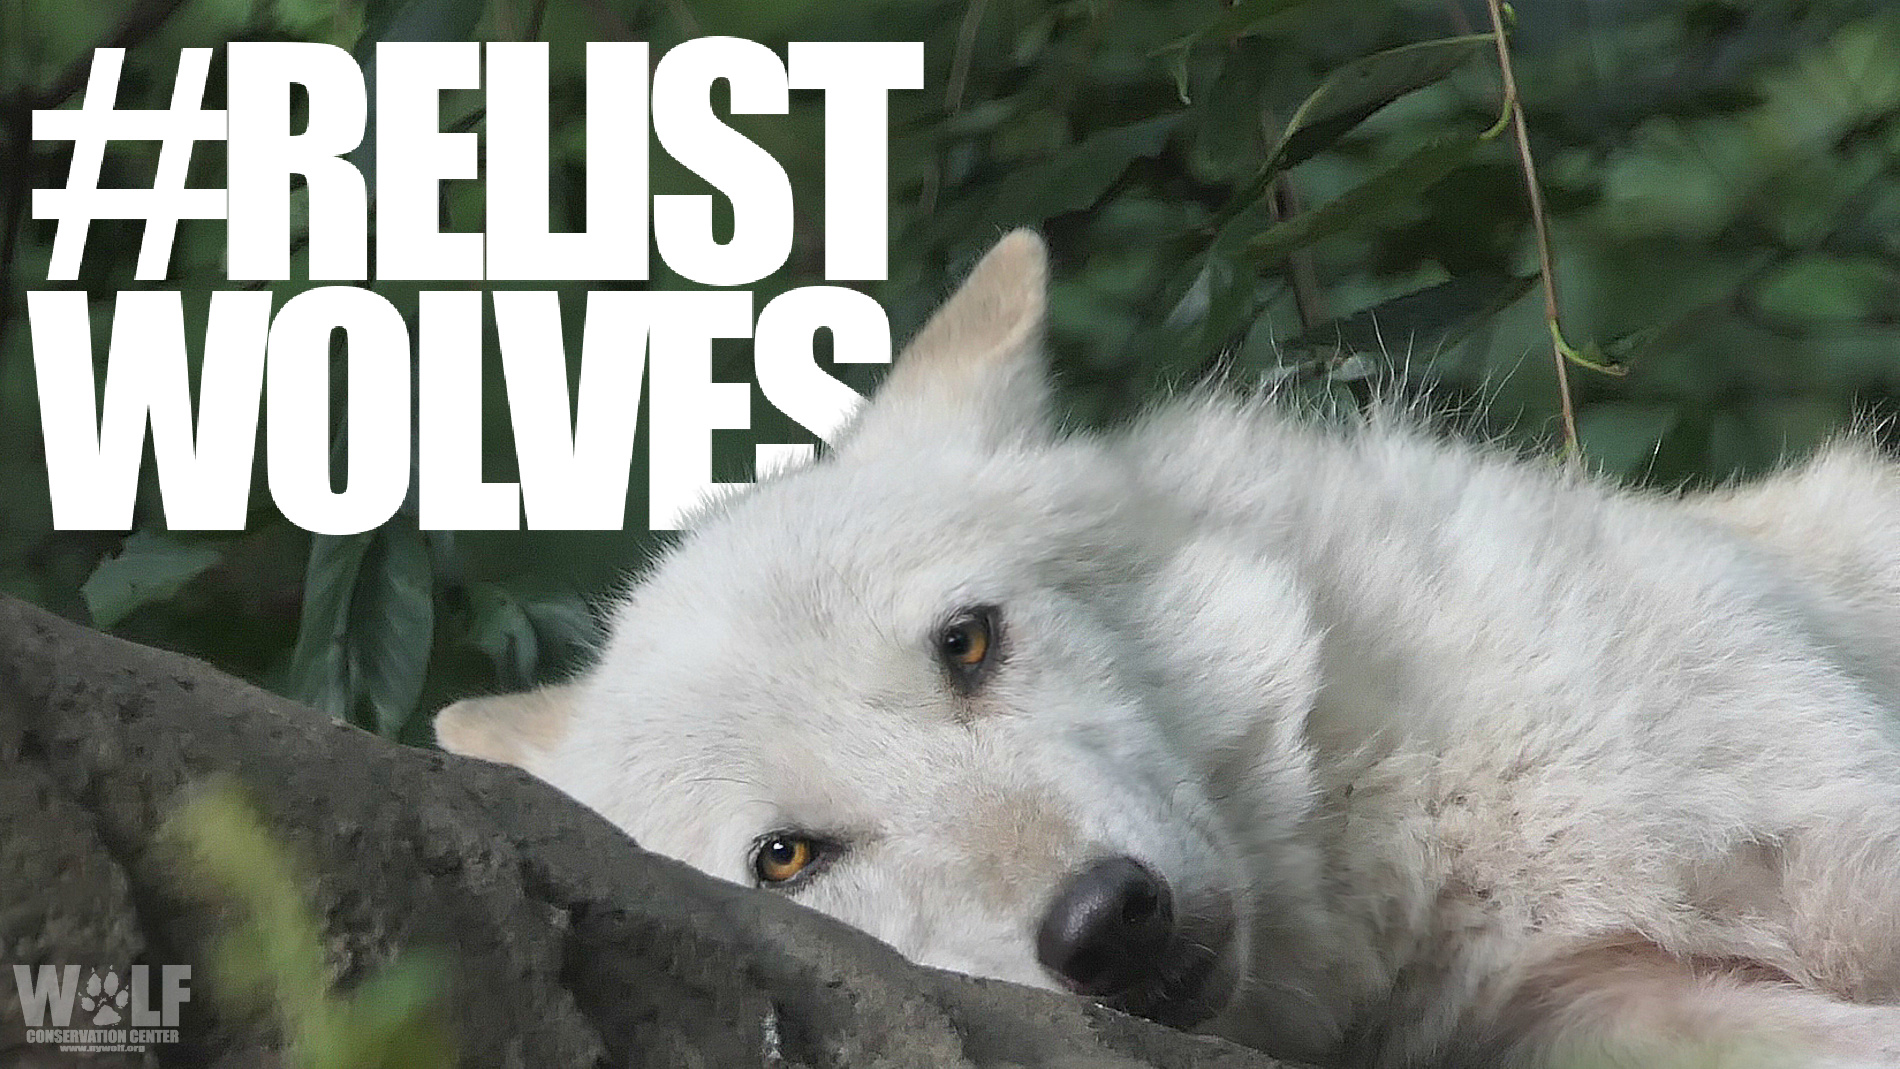 Relist wolves